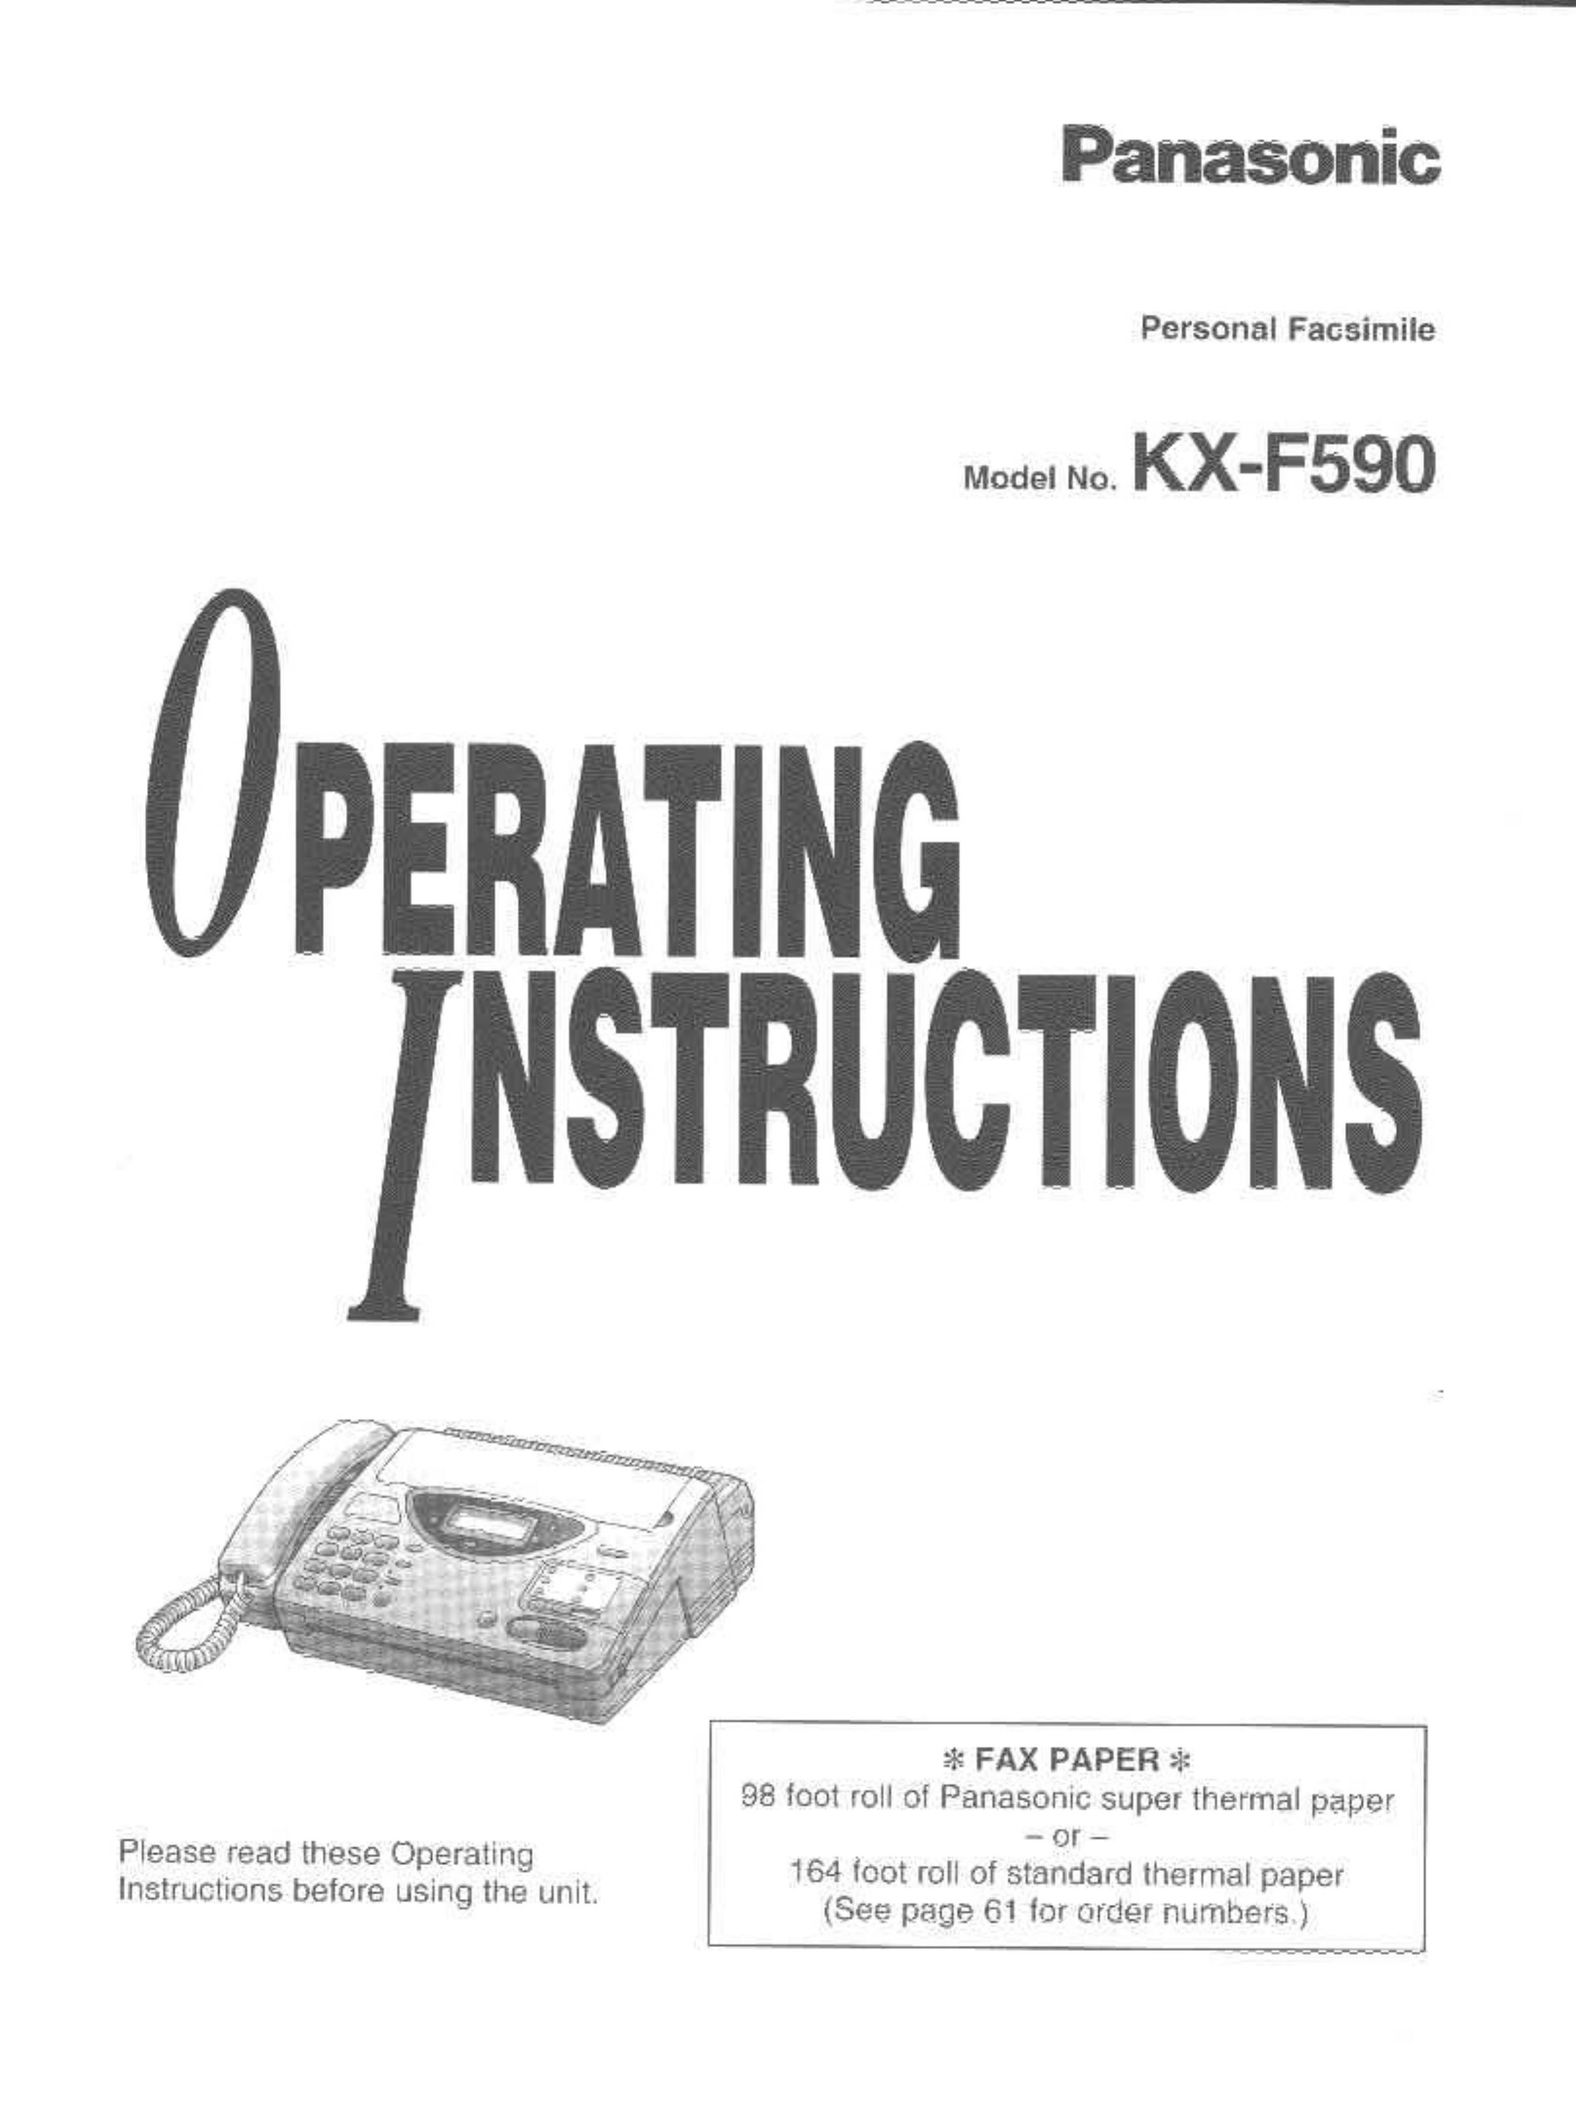 Panasonic KX-F590 Fax Machine User Manual